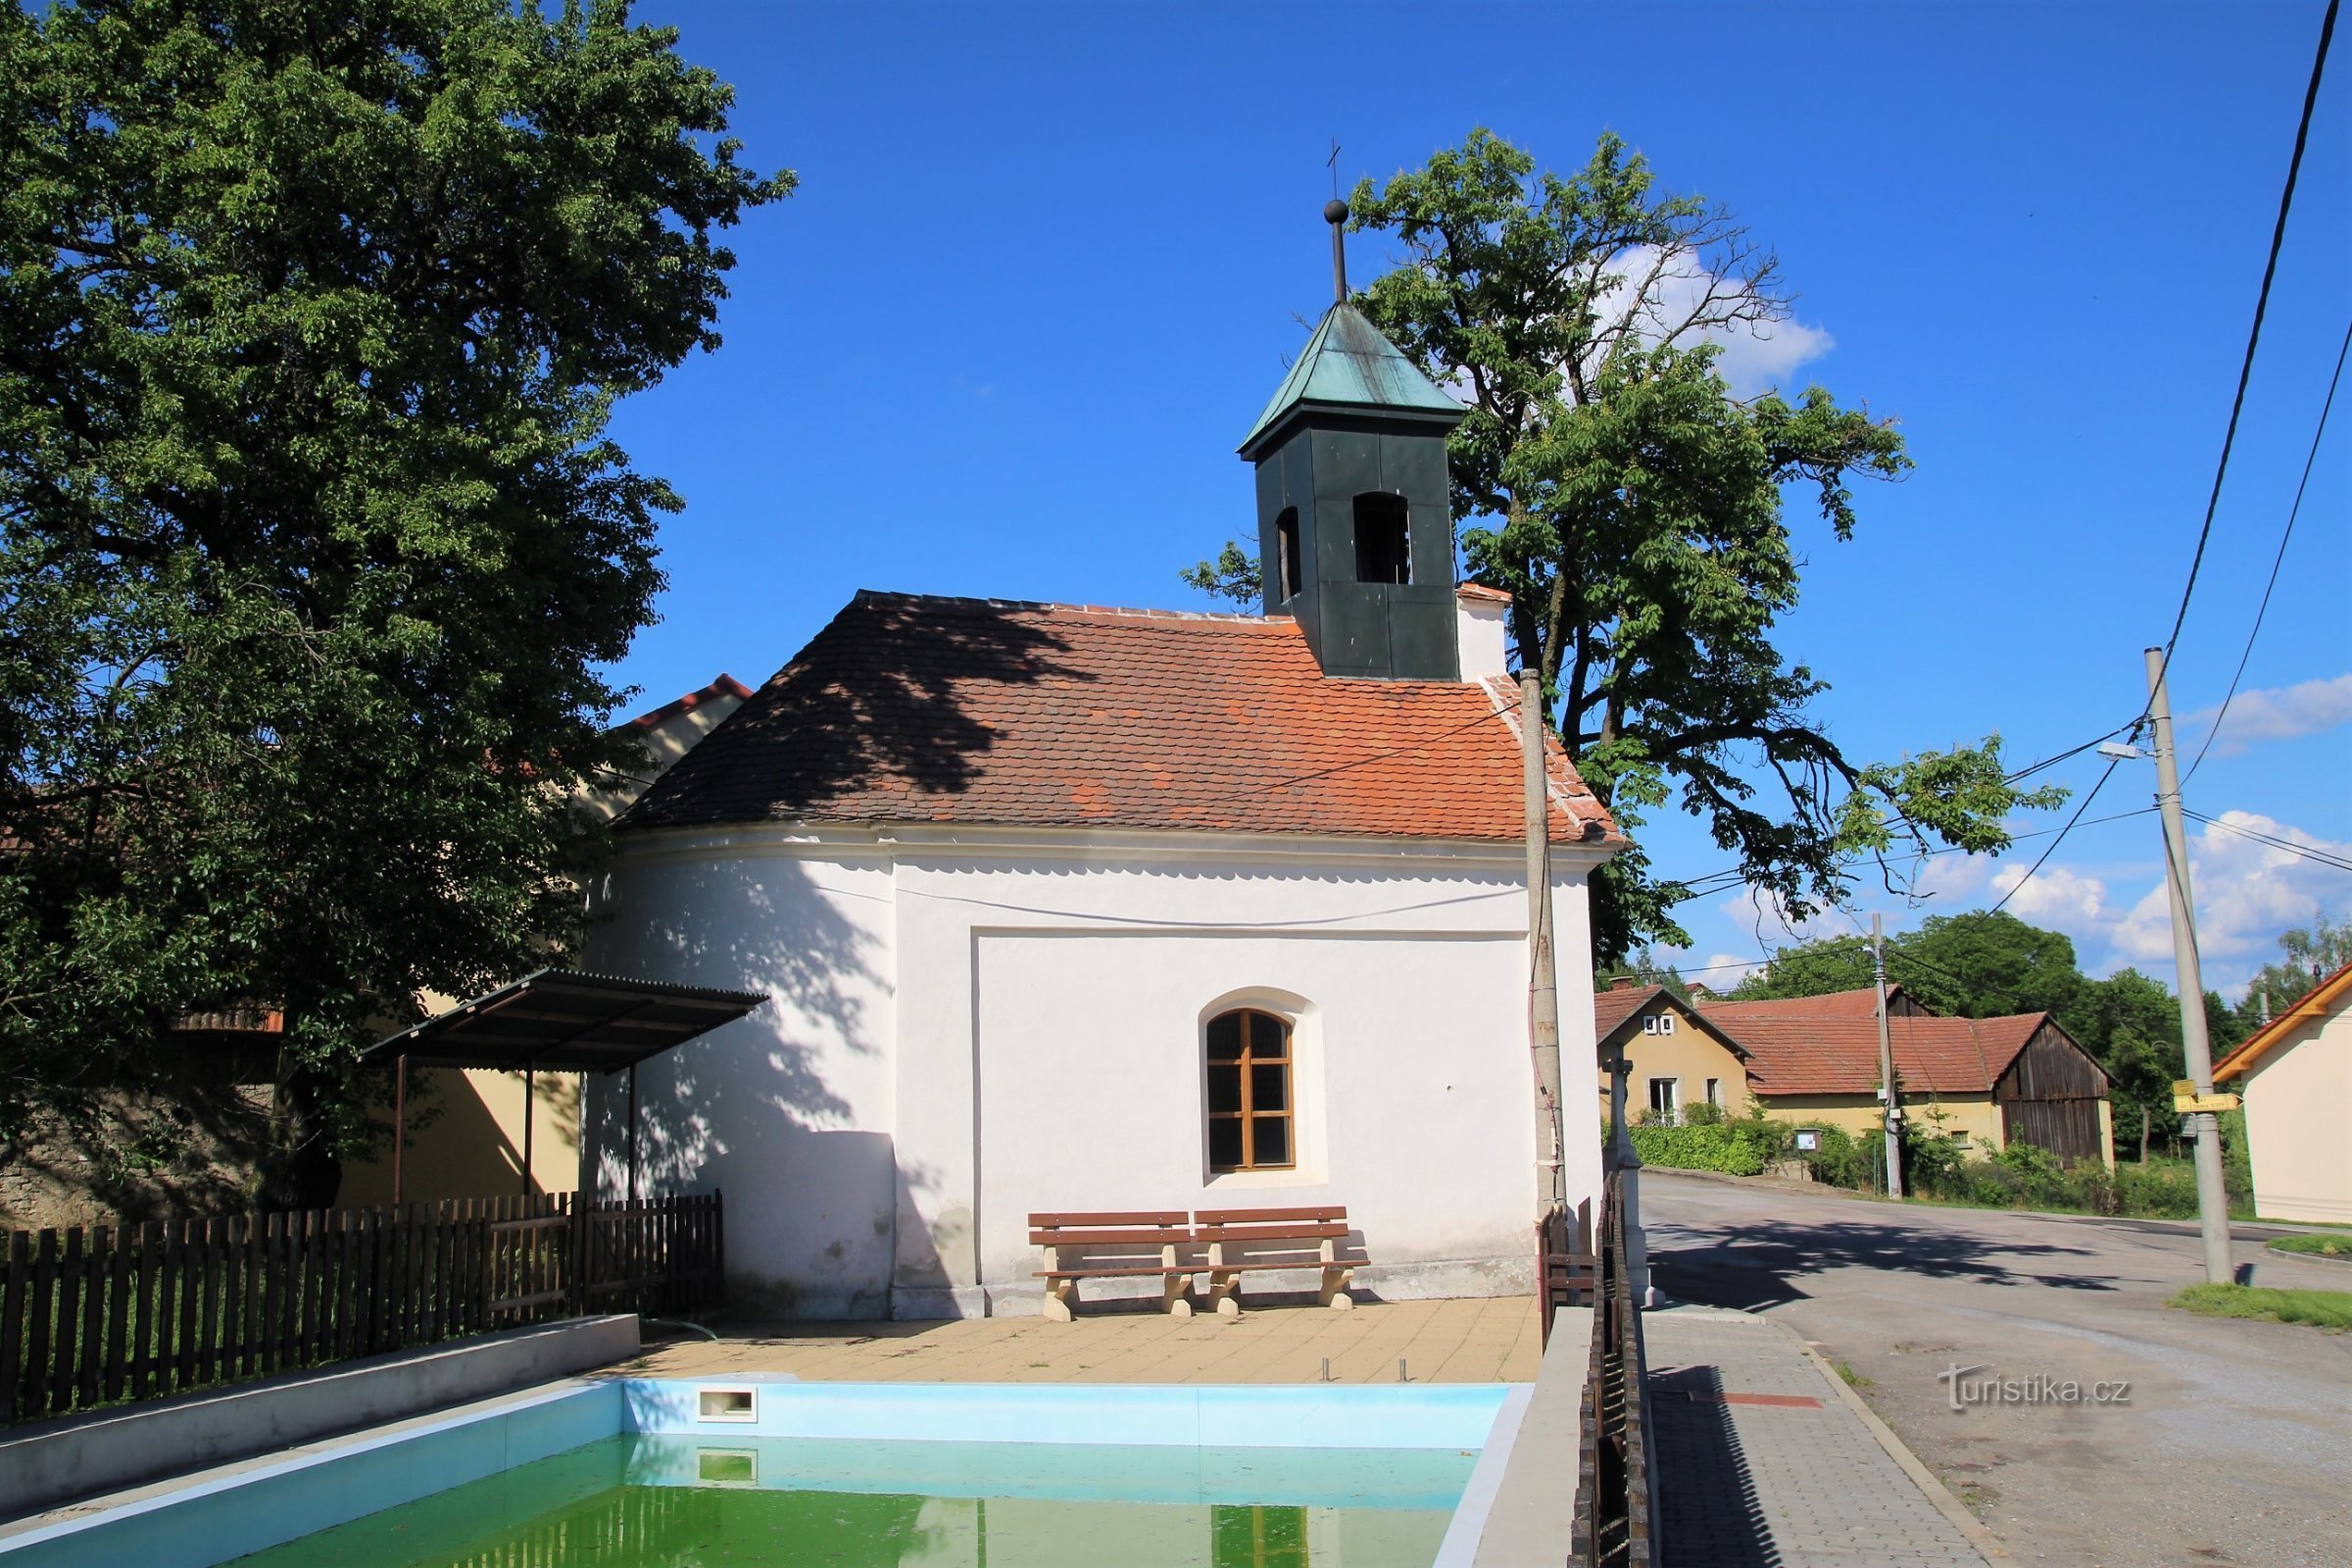 Kapel for Jomfru Marias himmelfart i landsbyen med et vandreservoir